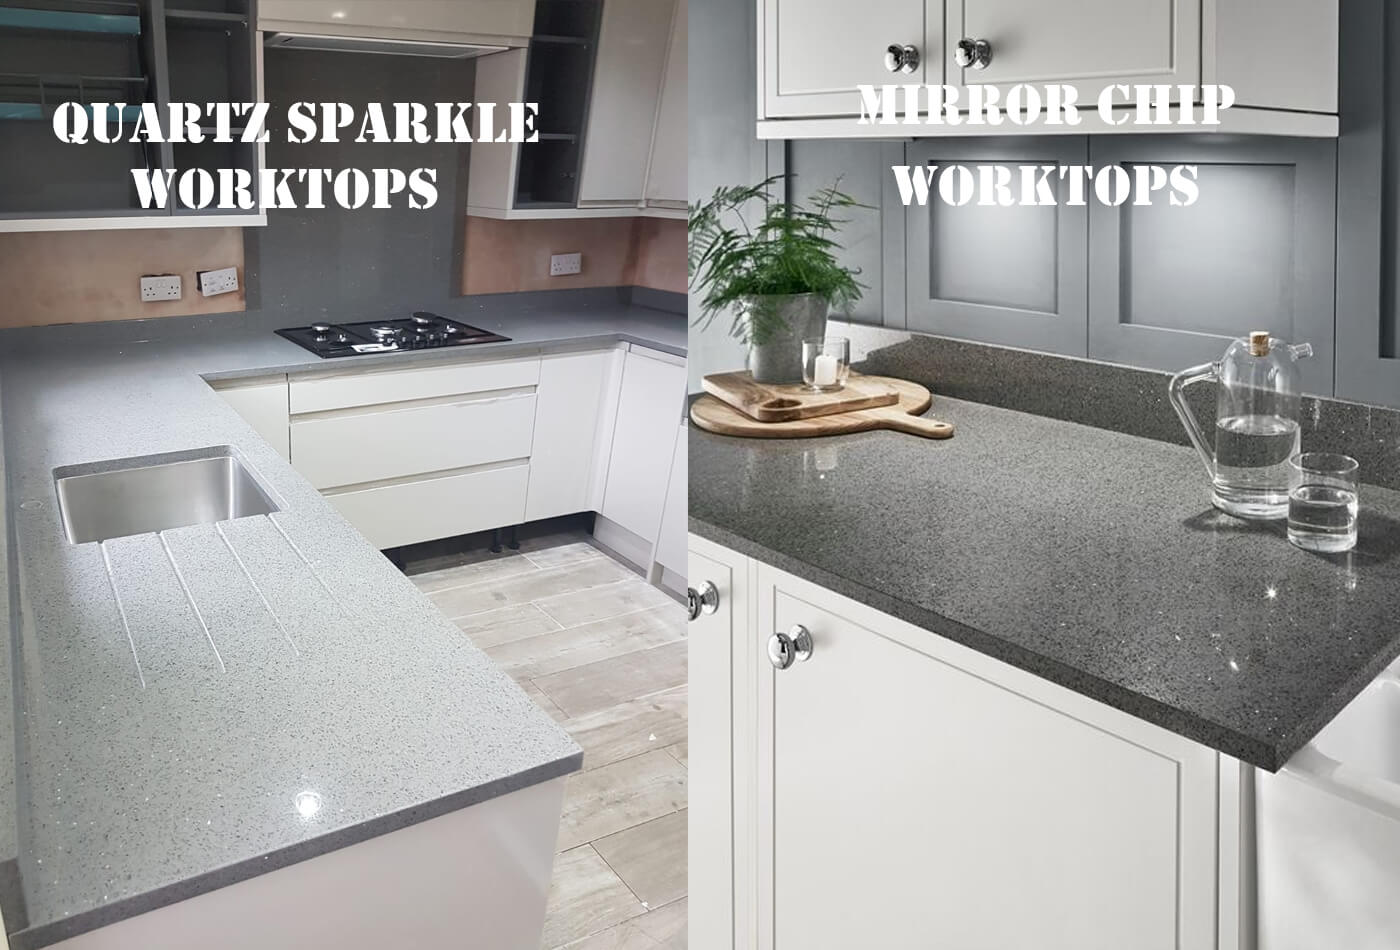 Types of Sparkle Kitchen Worktops